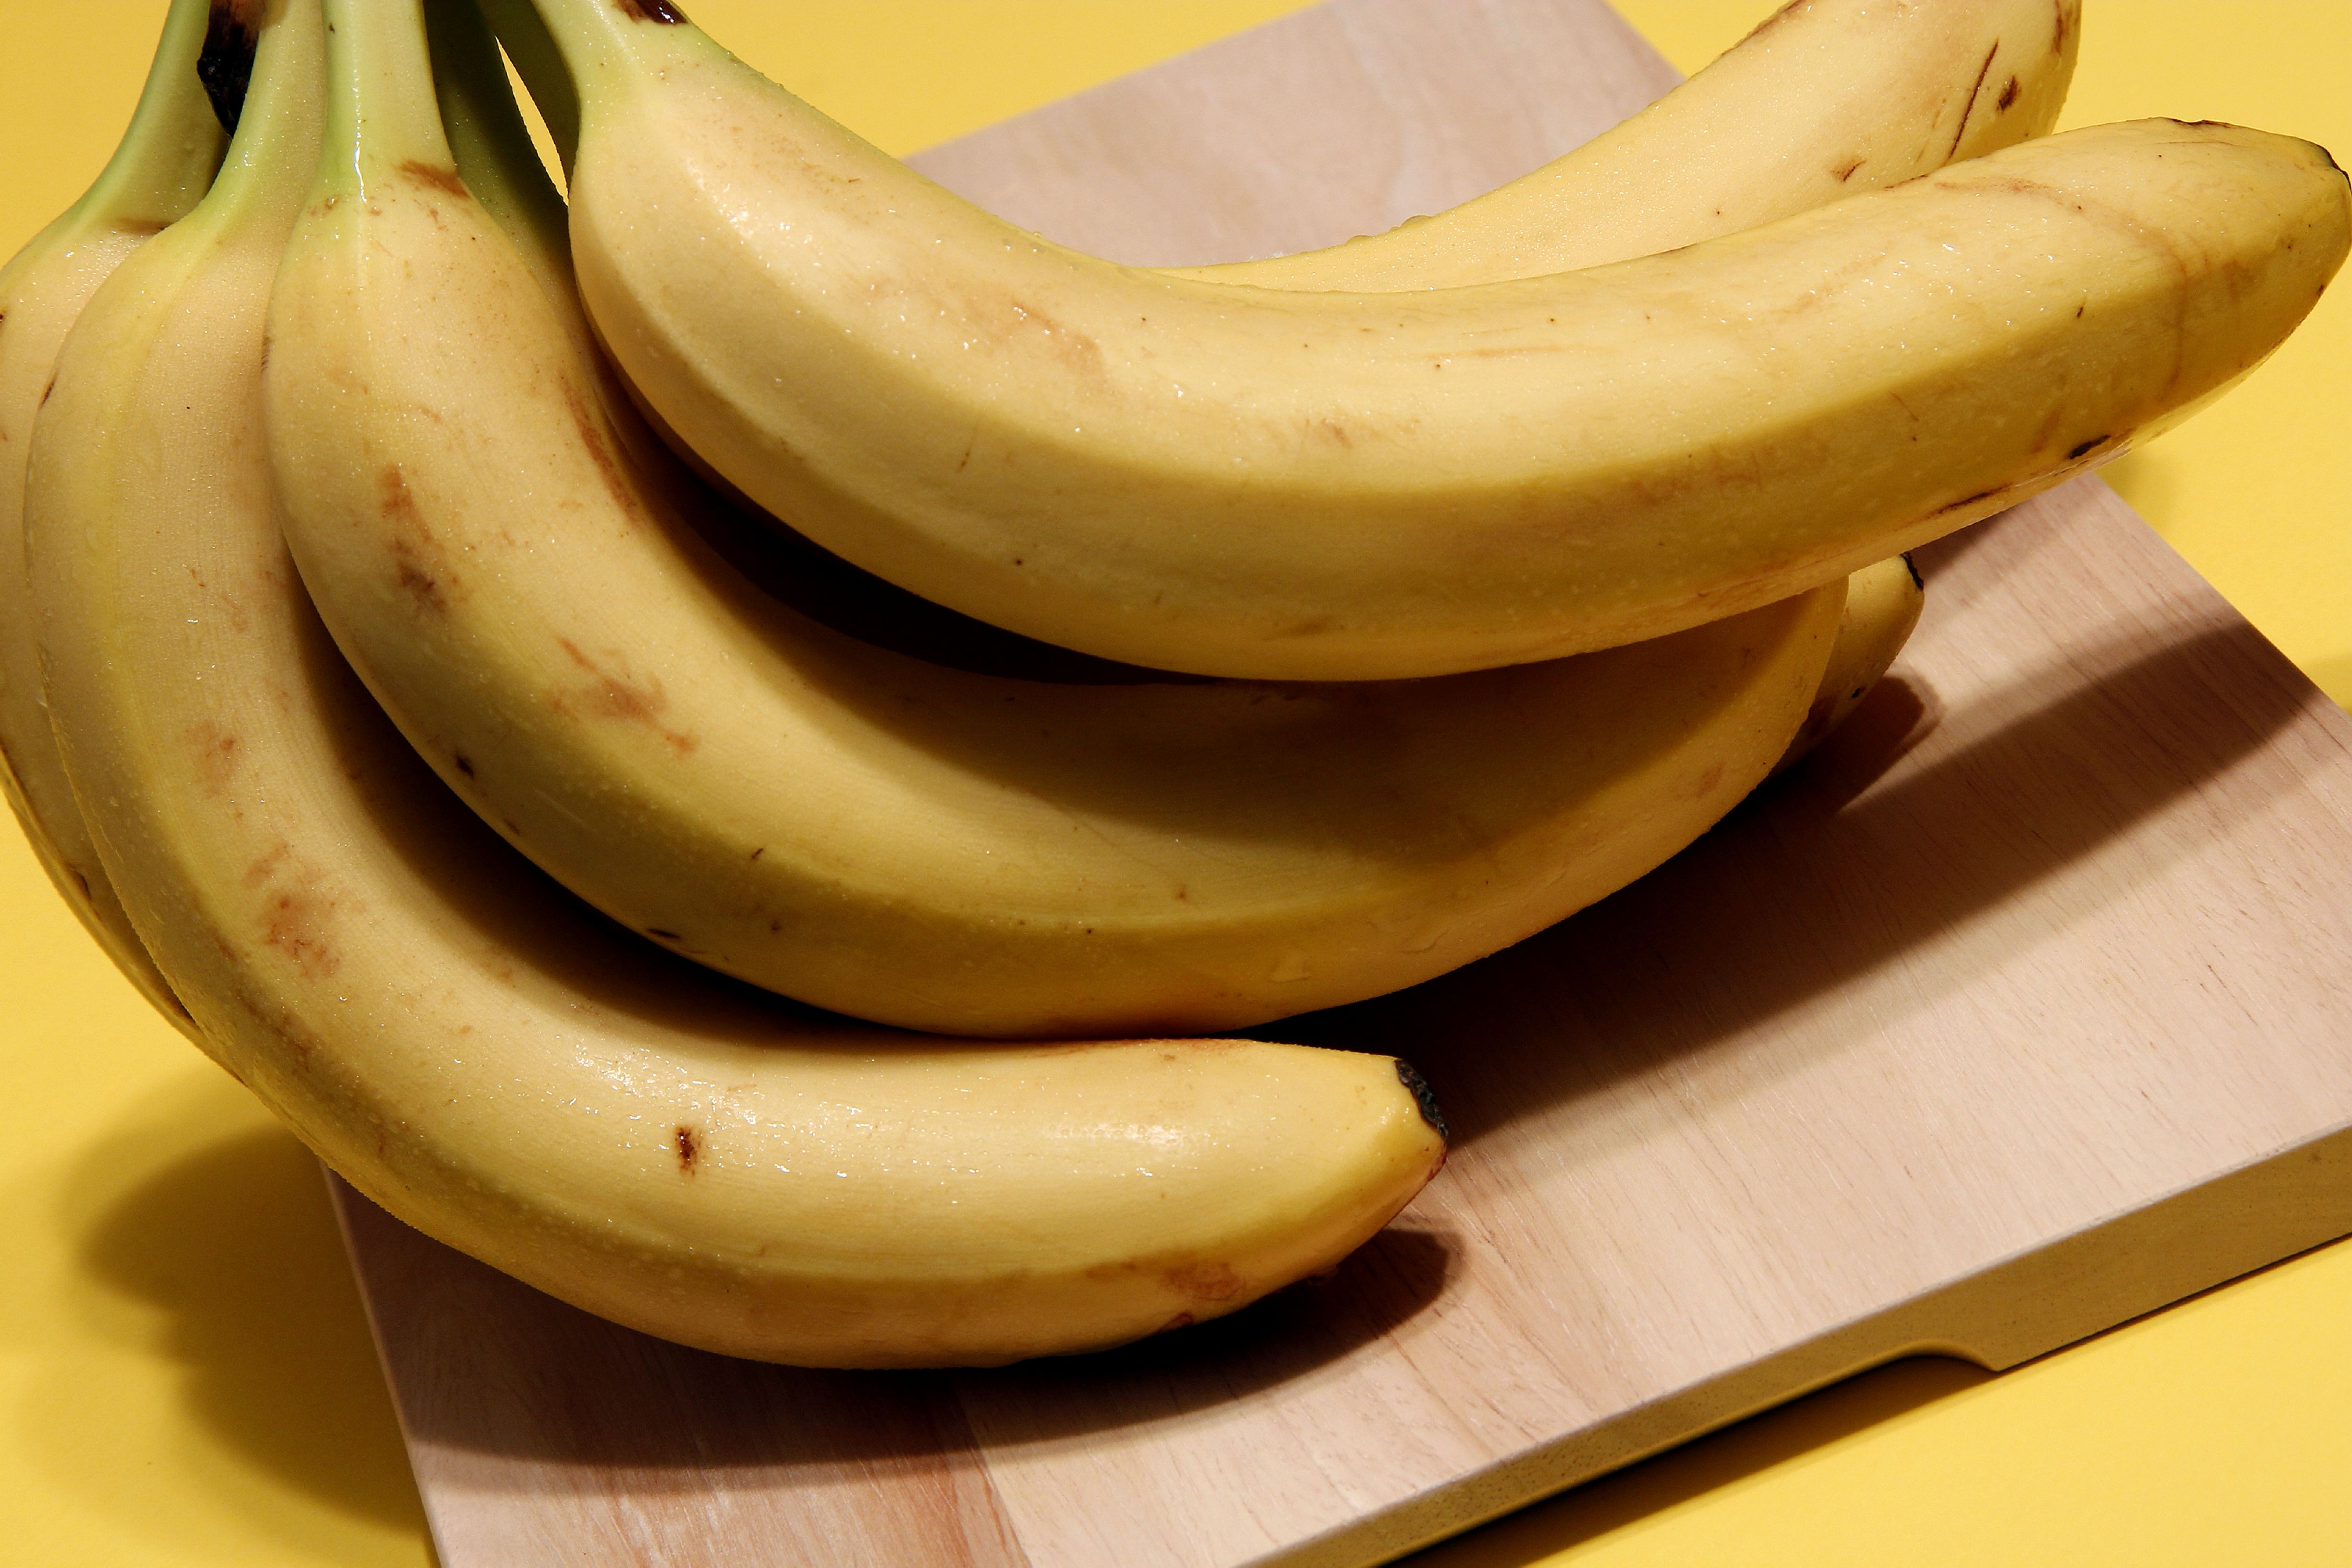 Free picture: bunch, ripe, bananas set, kitchen, cutting, board